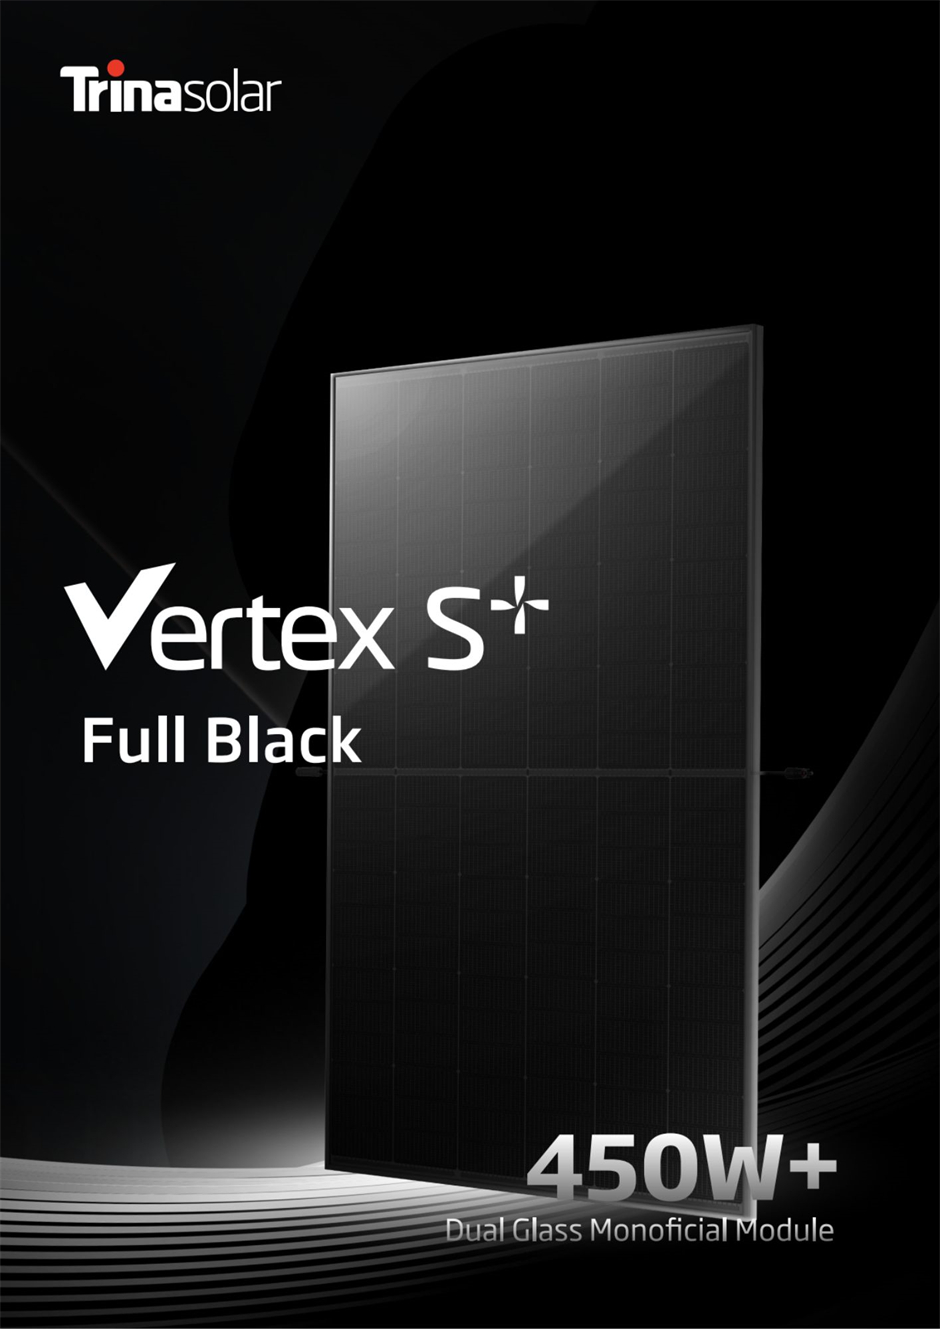 Trinasolar’s Vertex S+ Full Black: 450W+ Dual-Glass Monofacial Module